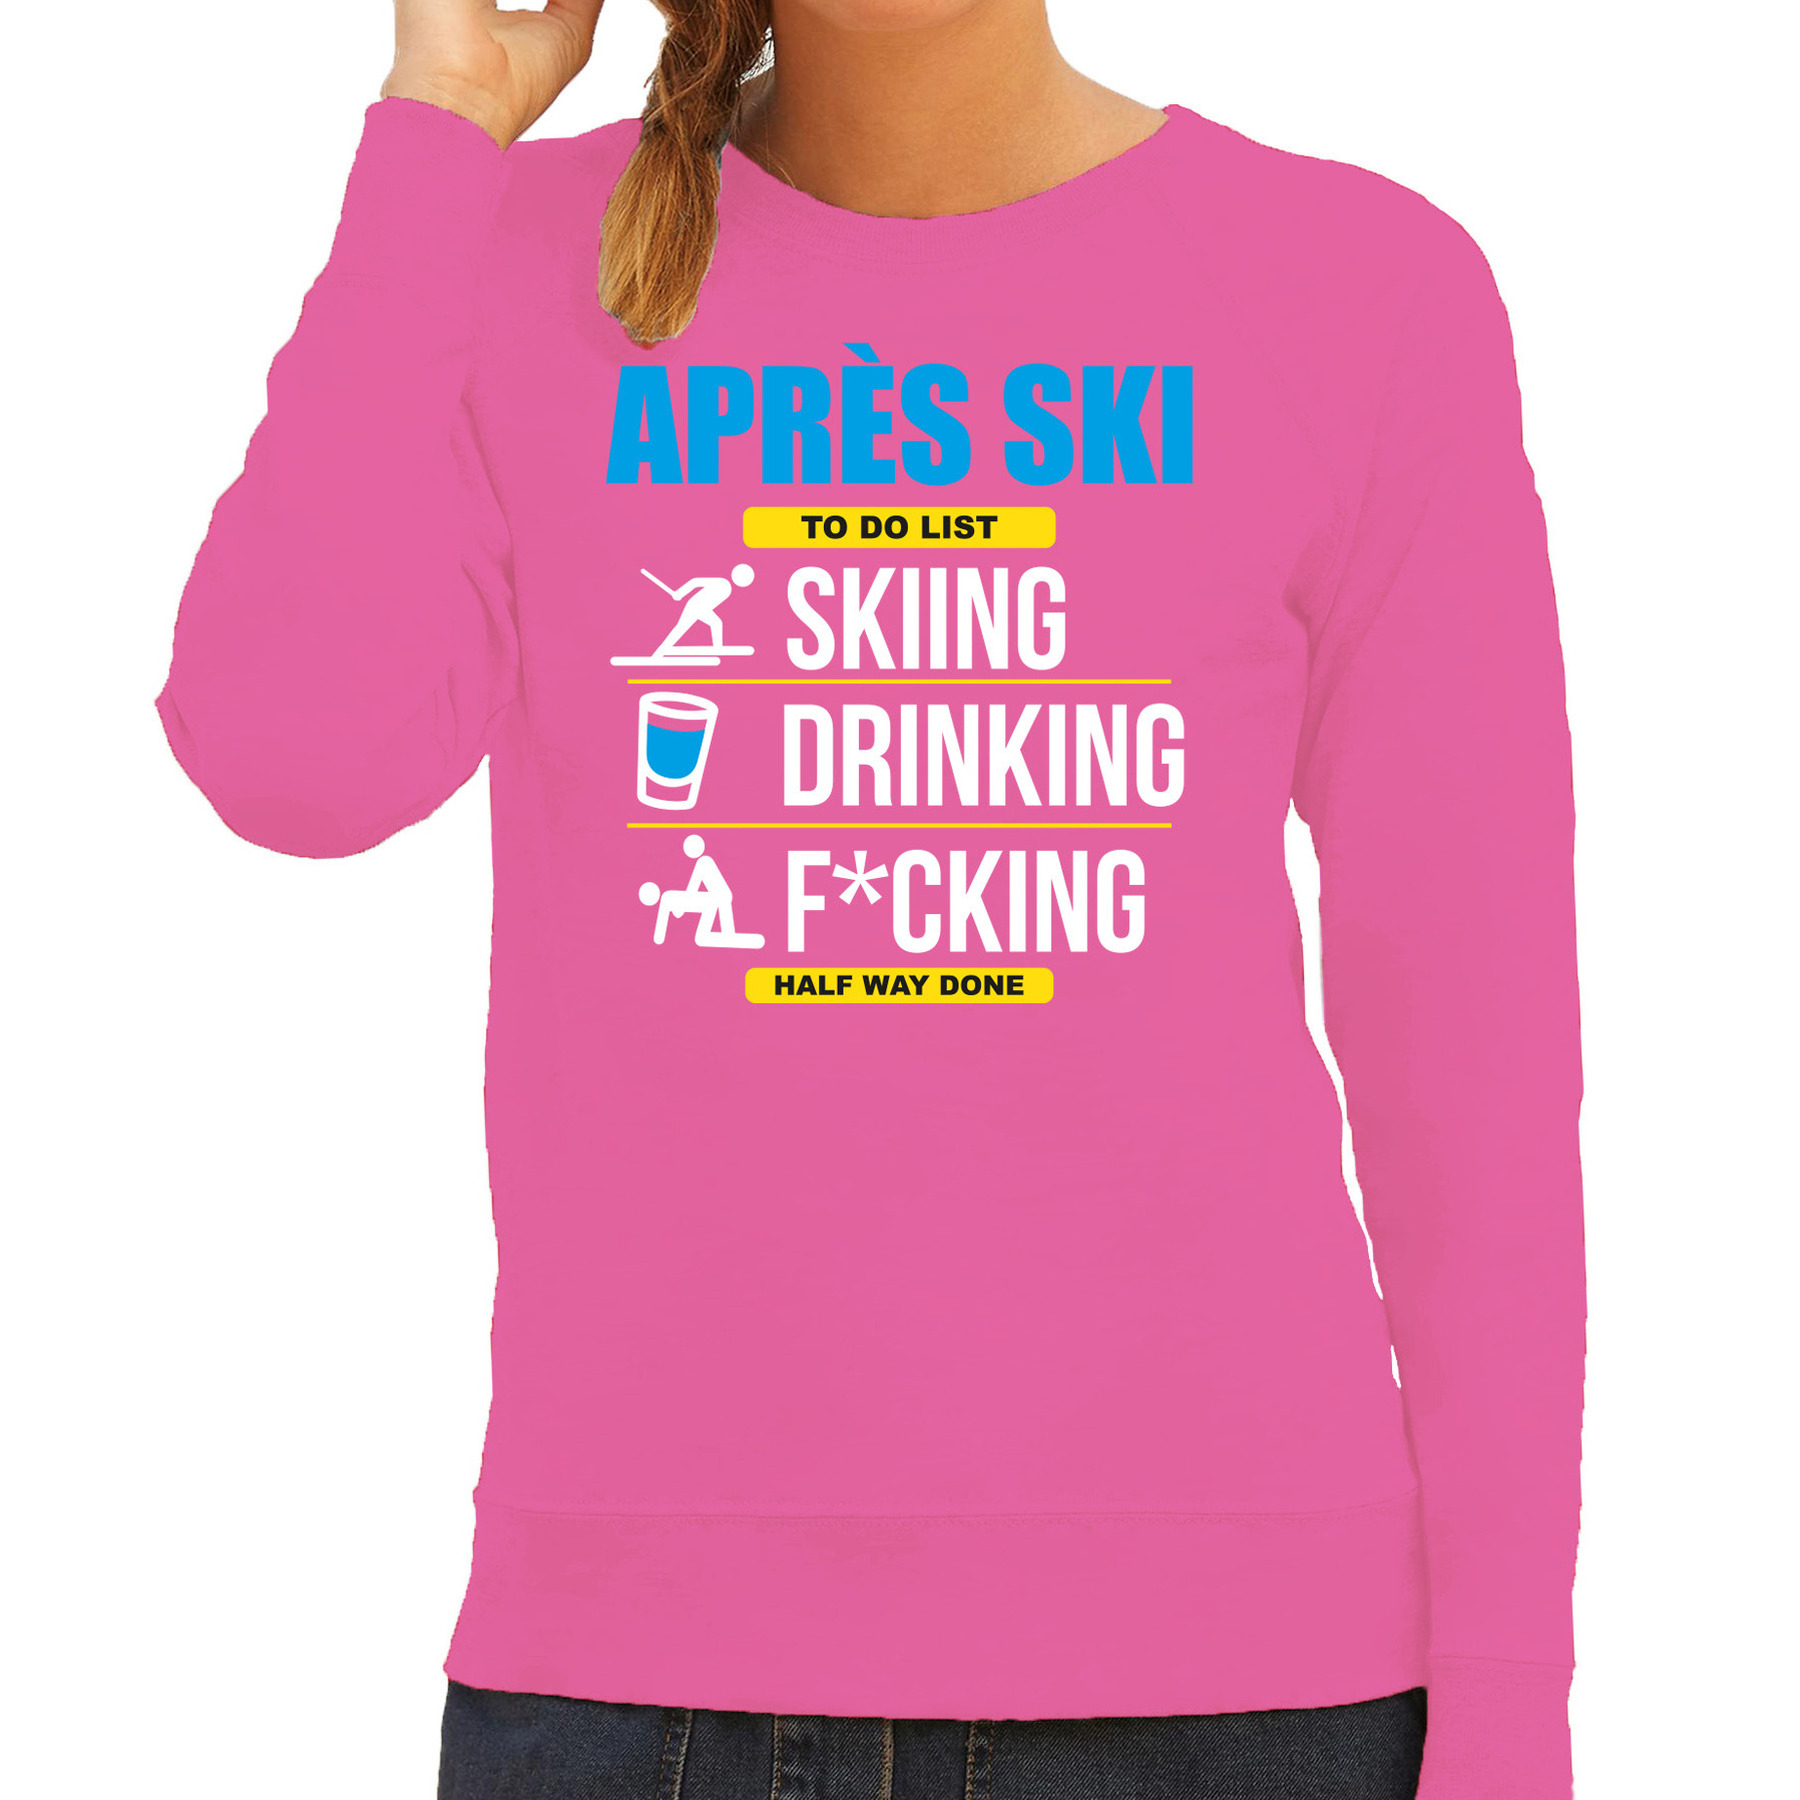 Apres ski sweater-trui voor dames to do list roze wintersport skien